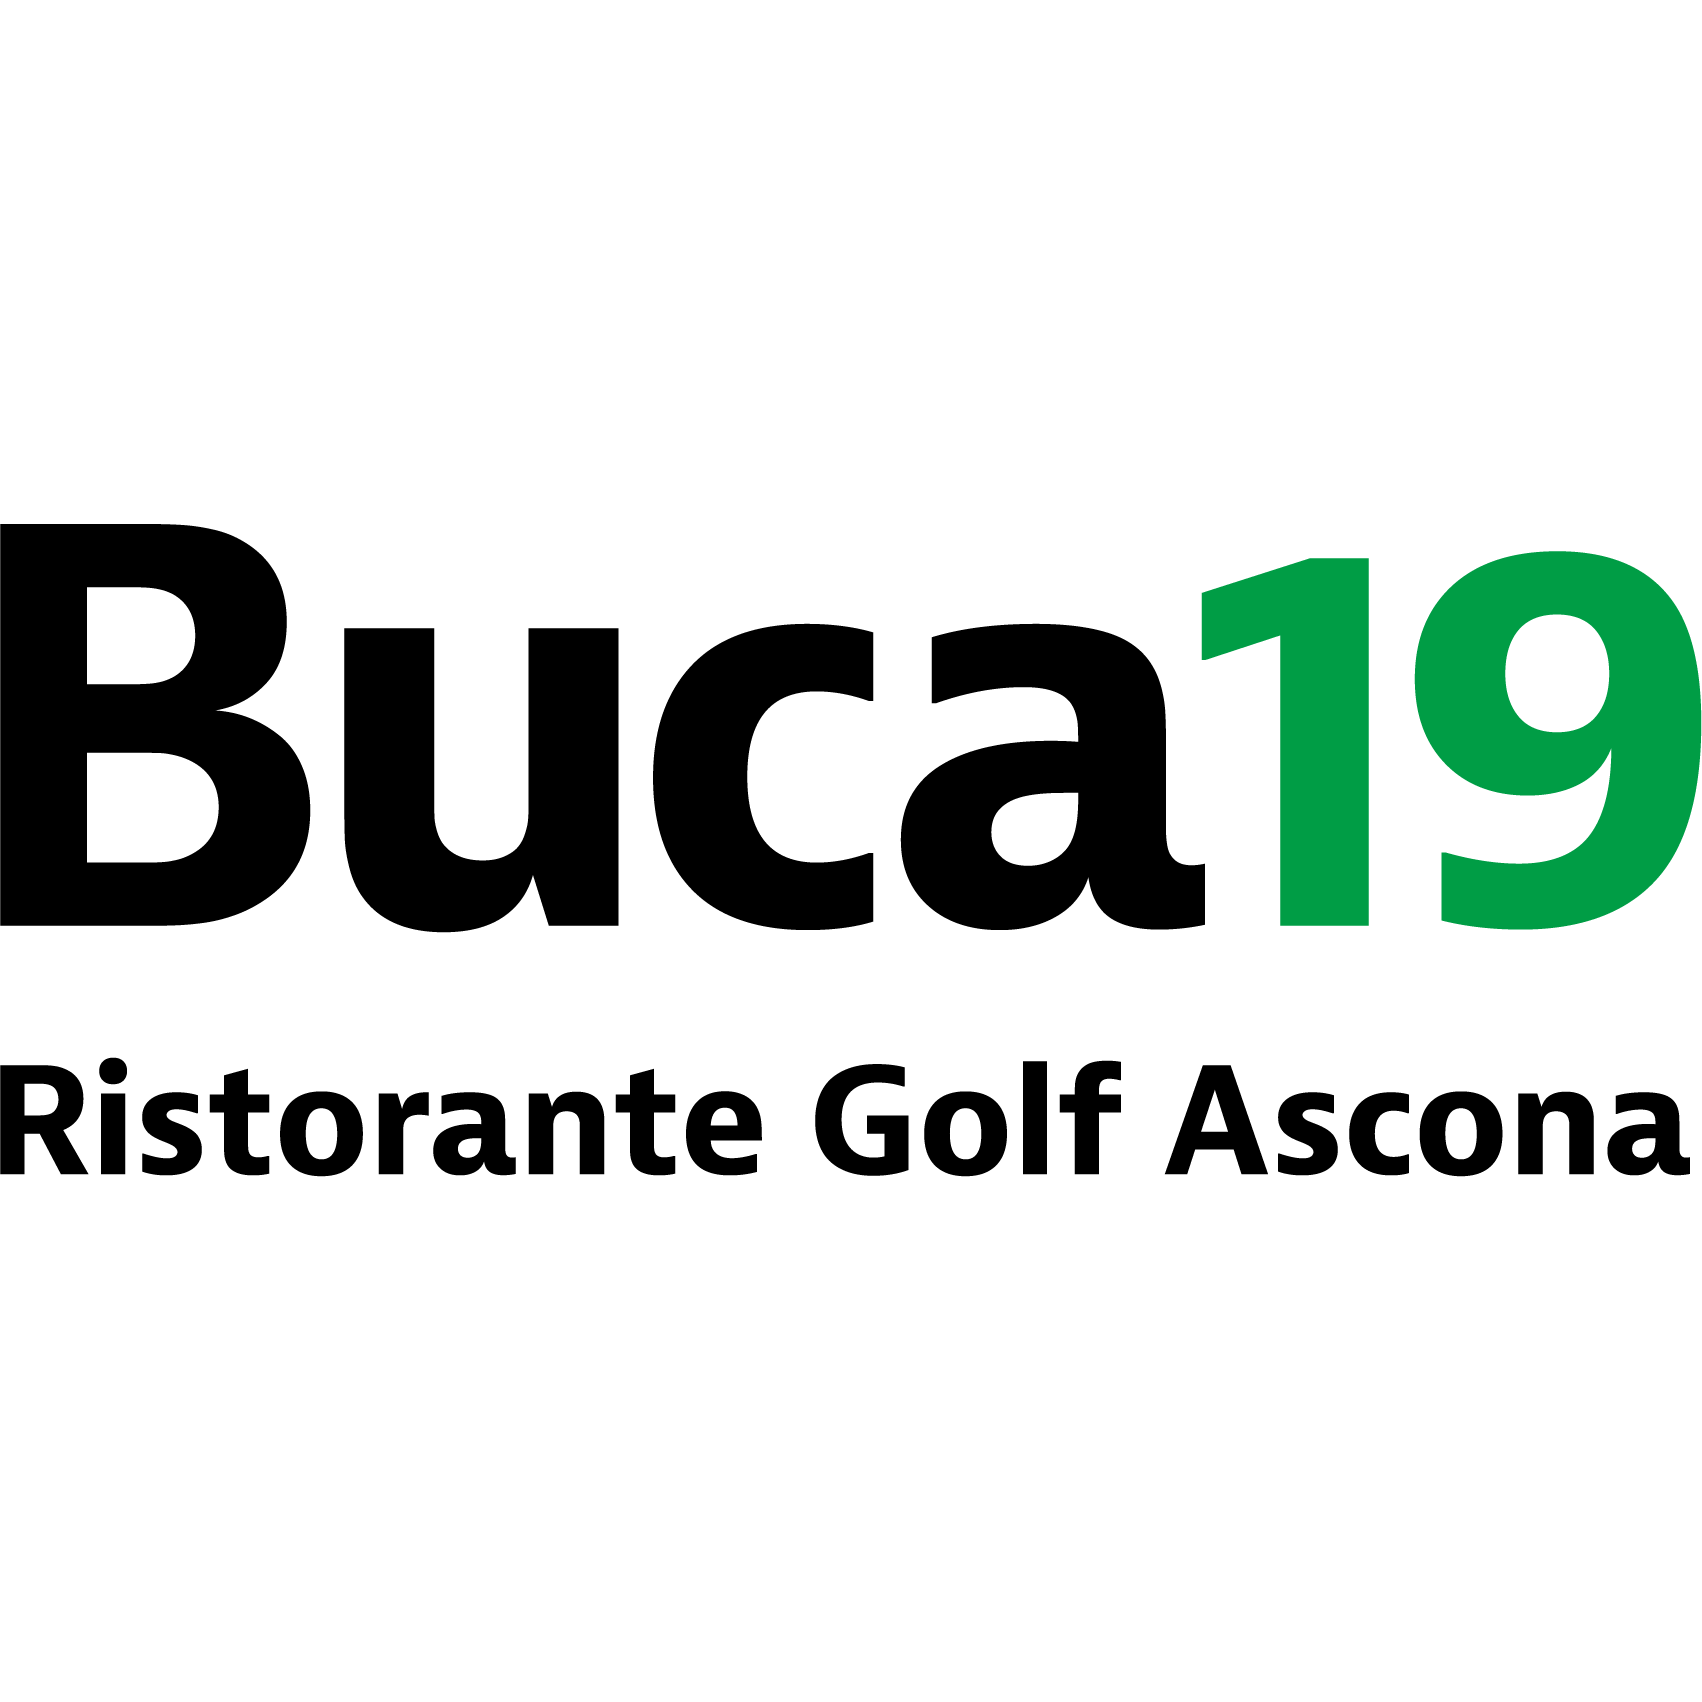 Ristorante Bucadiciannove Logo